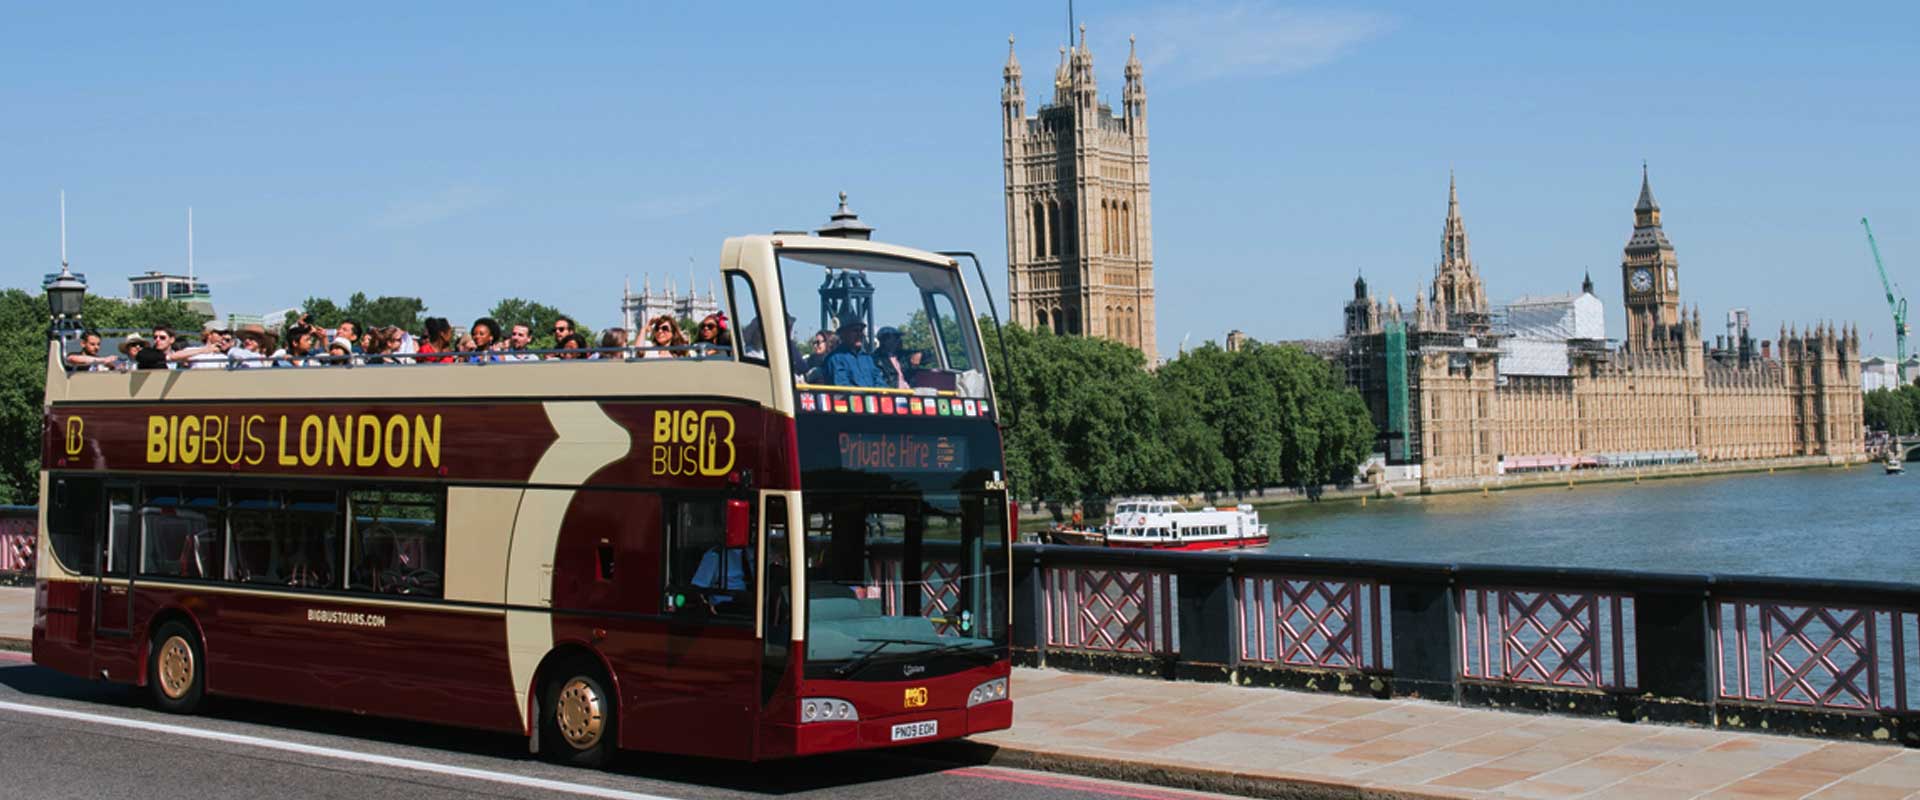 big bus tours london email address